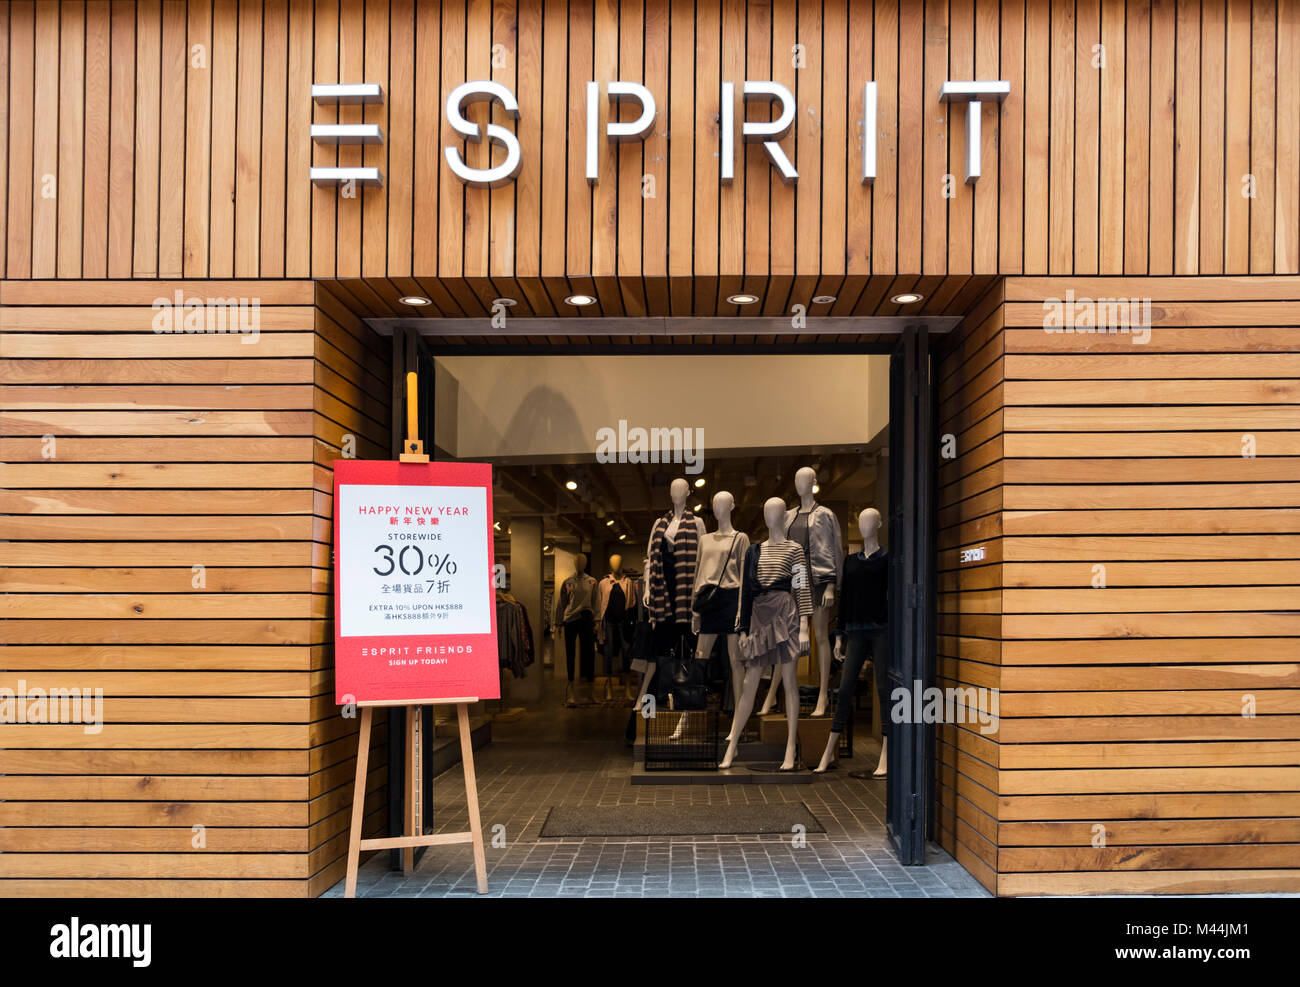 Hong - Febrero 11, Esprit en Hong Kong. Esprit es un fabricante de ropa, calzado, accesorios, joyería Fotografía de stock - Alamy